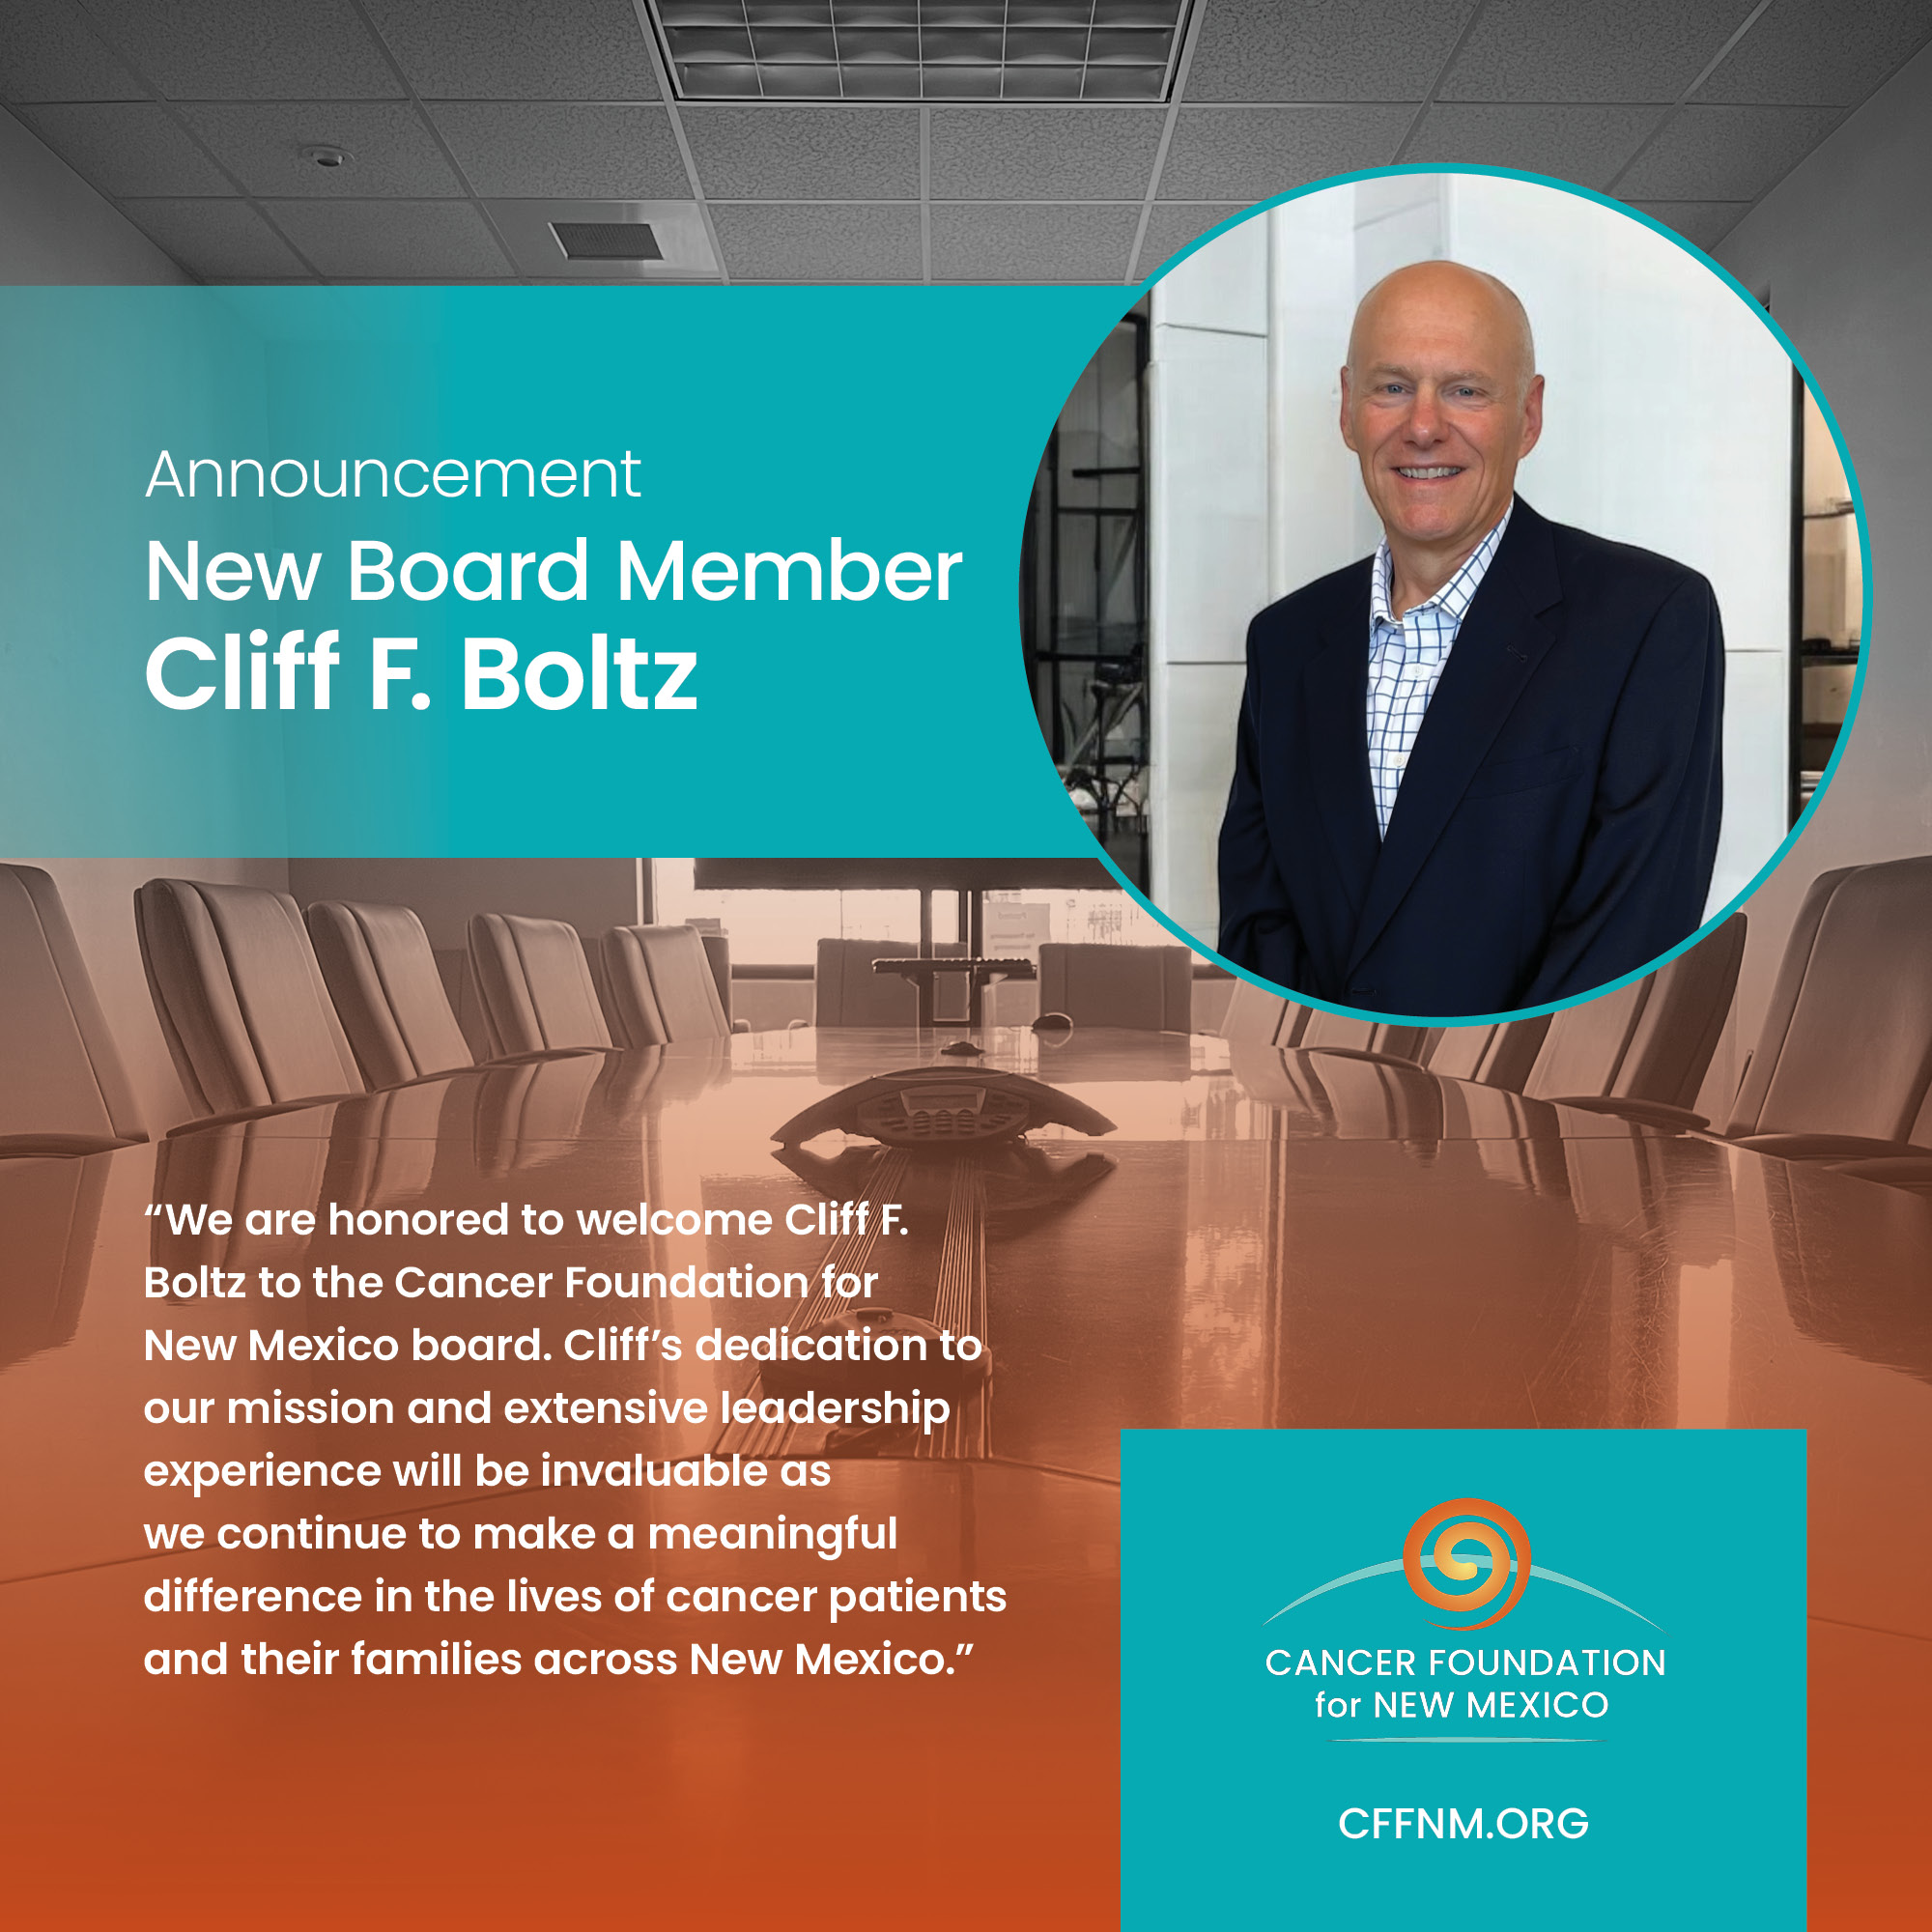 Cliff F. Boltz